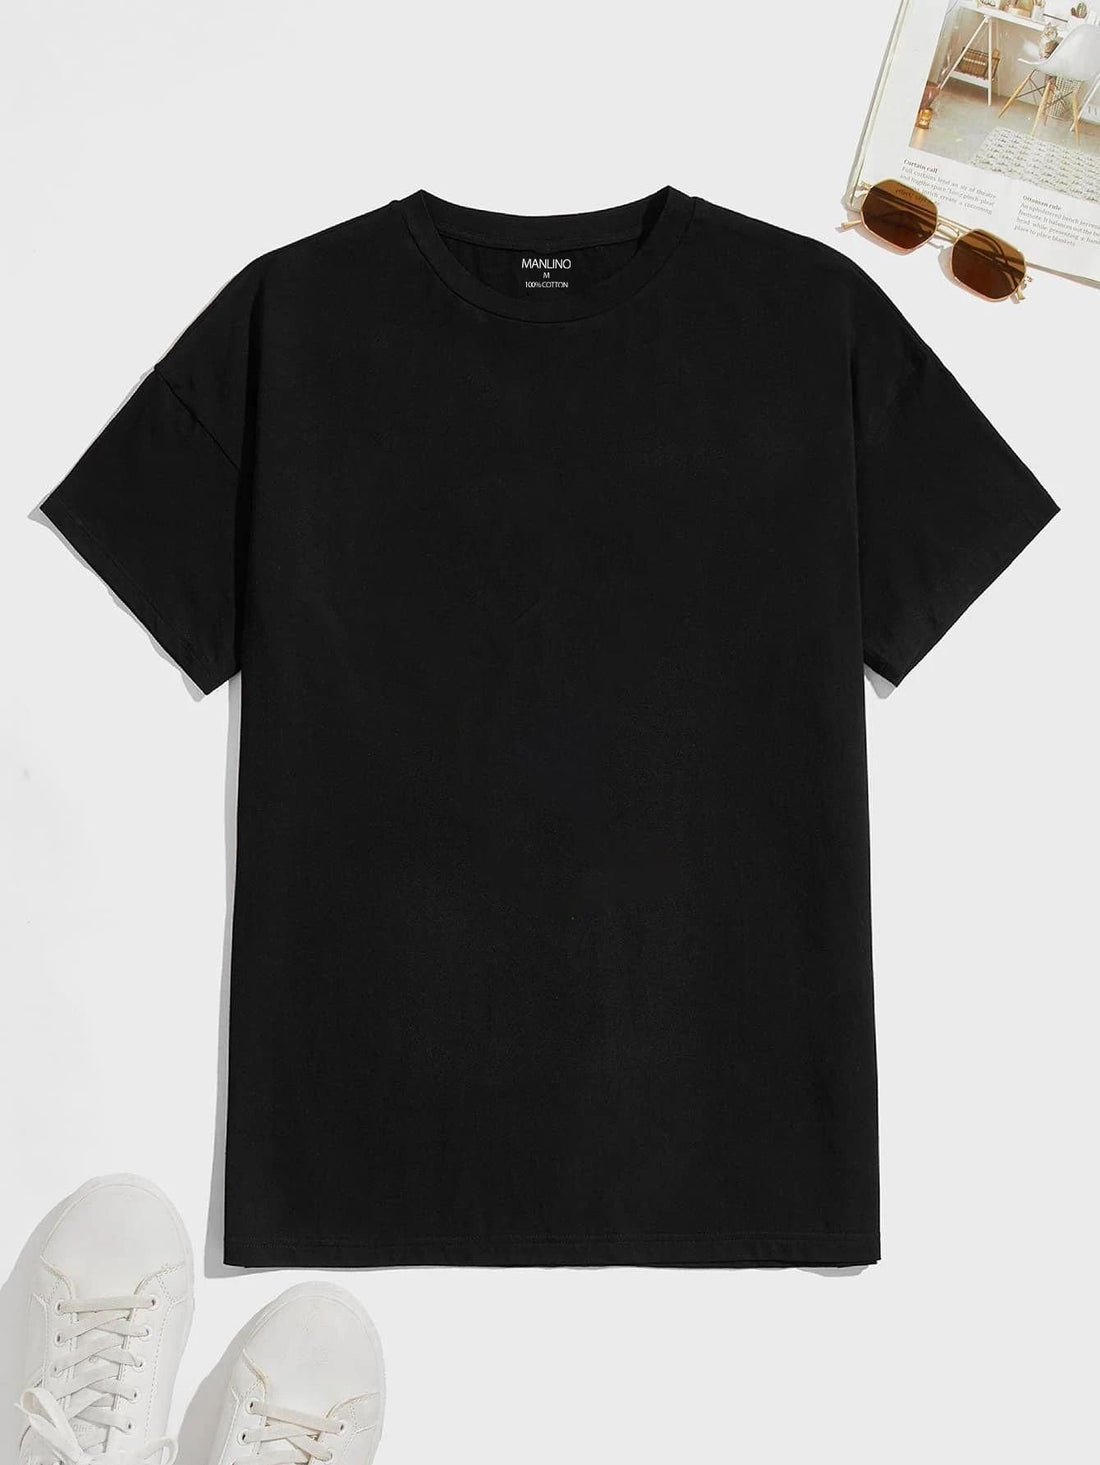 Manlino Men's Black Round Neck Half Sleeve Graphic Print T-Shirt